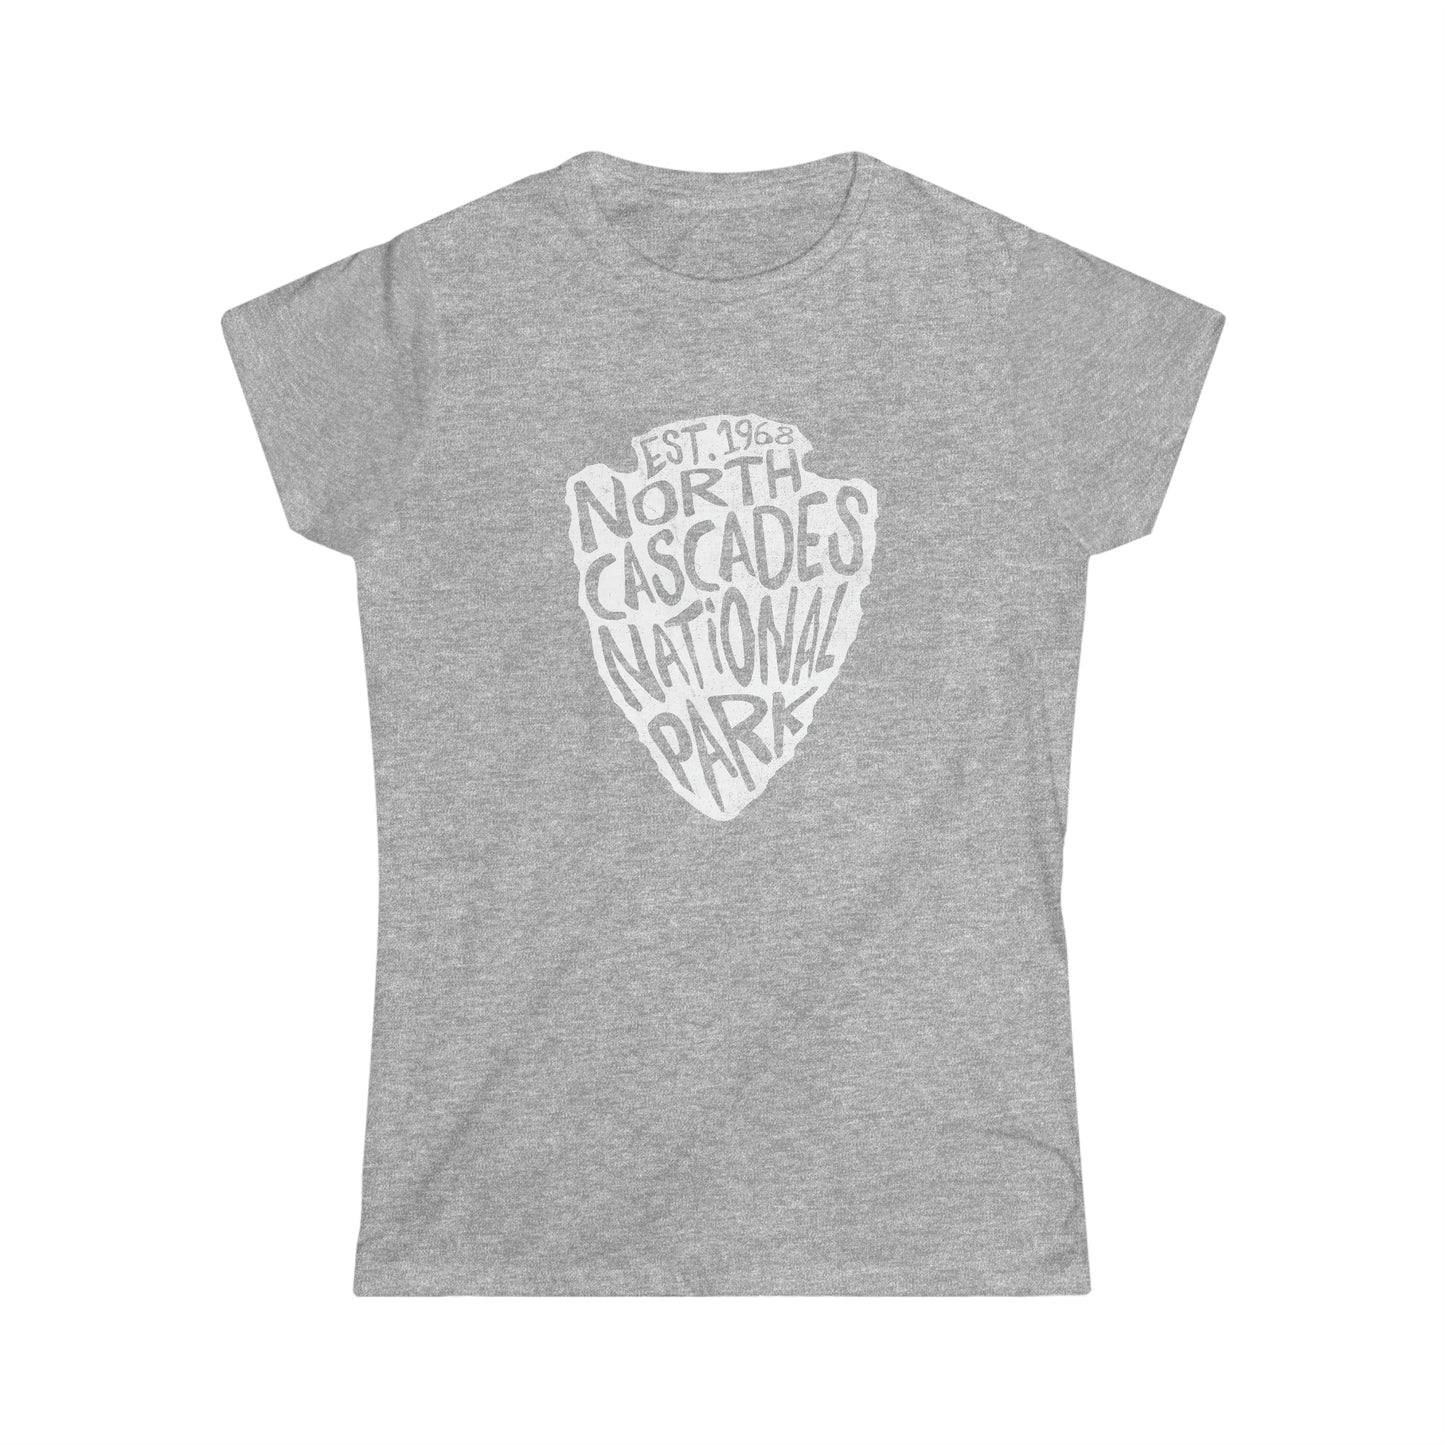 North Cascades National Park Women's T-Shirt - Arrowhead Design